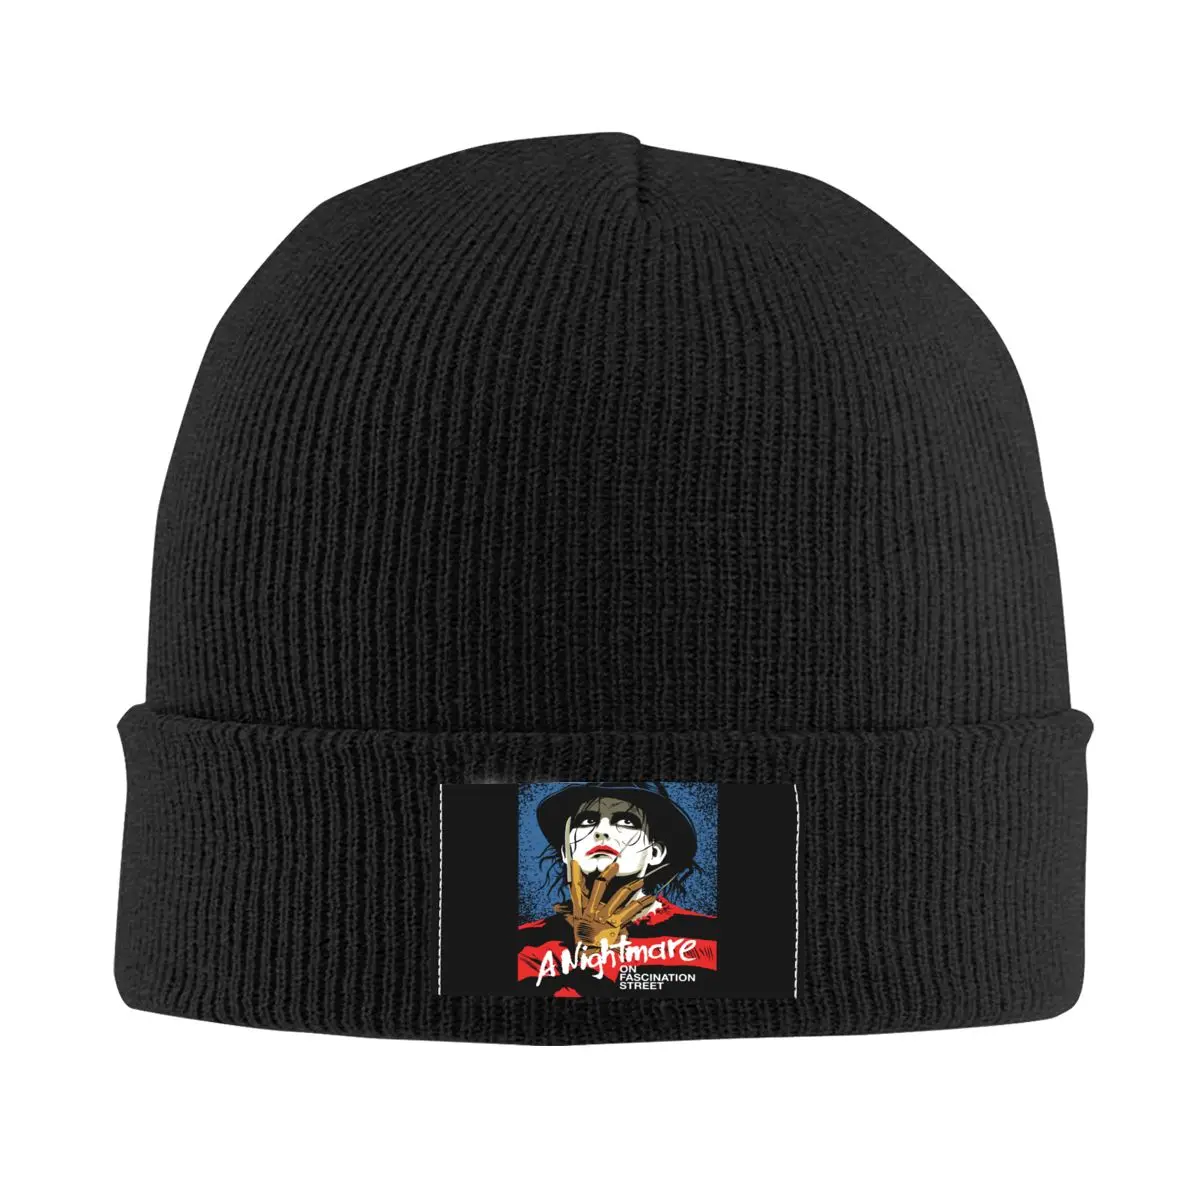 

Texas Chainsaw Massacre Knit Hat Beanie Winter Hats Warm Unisex Casual Caps for Men Women Gift